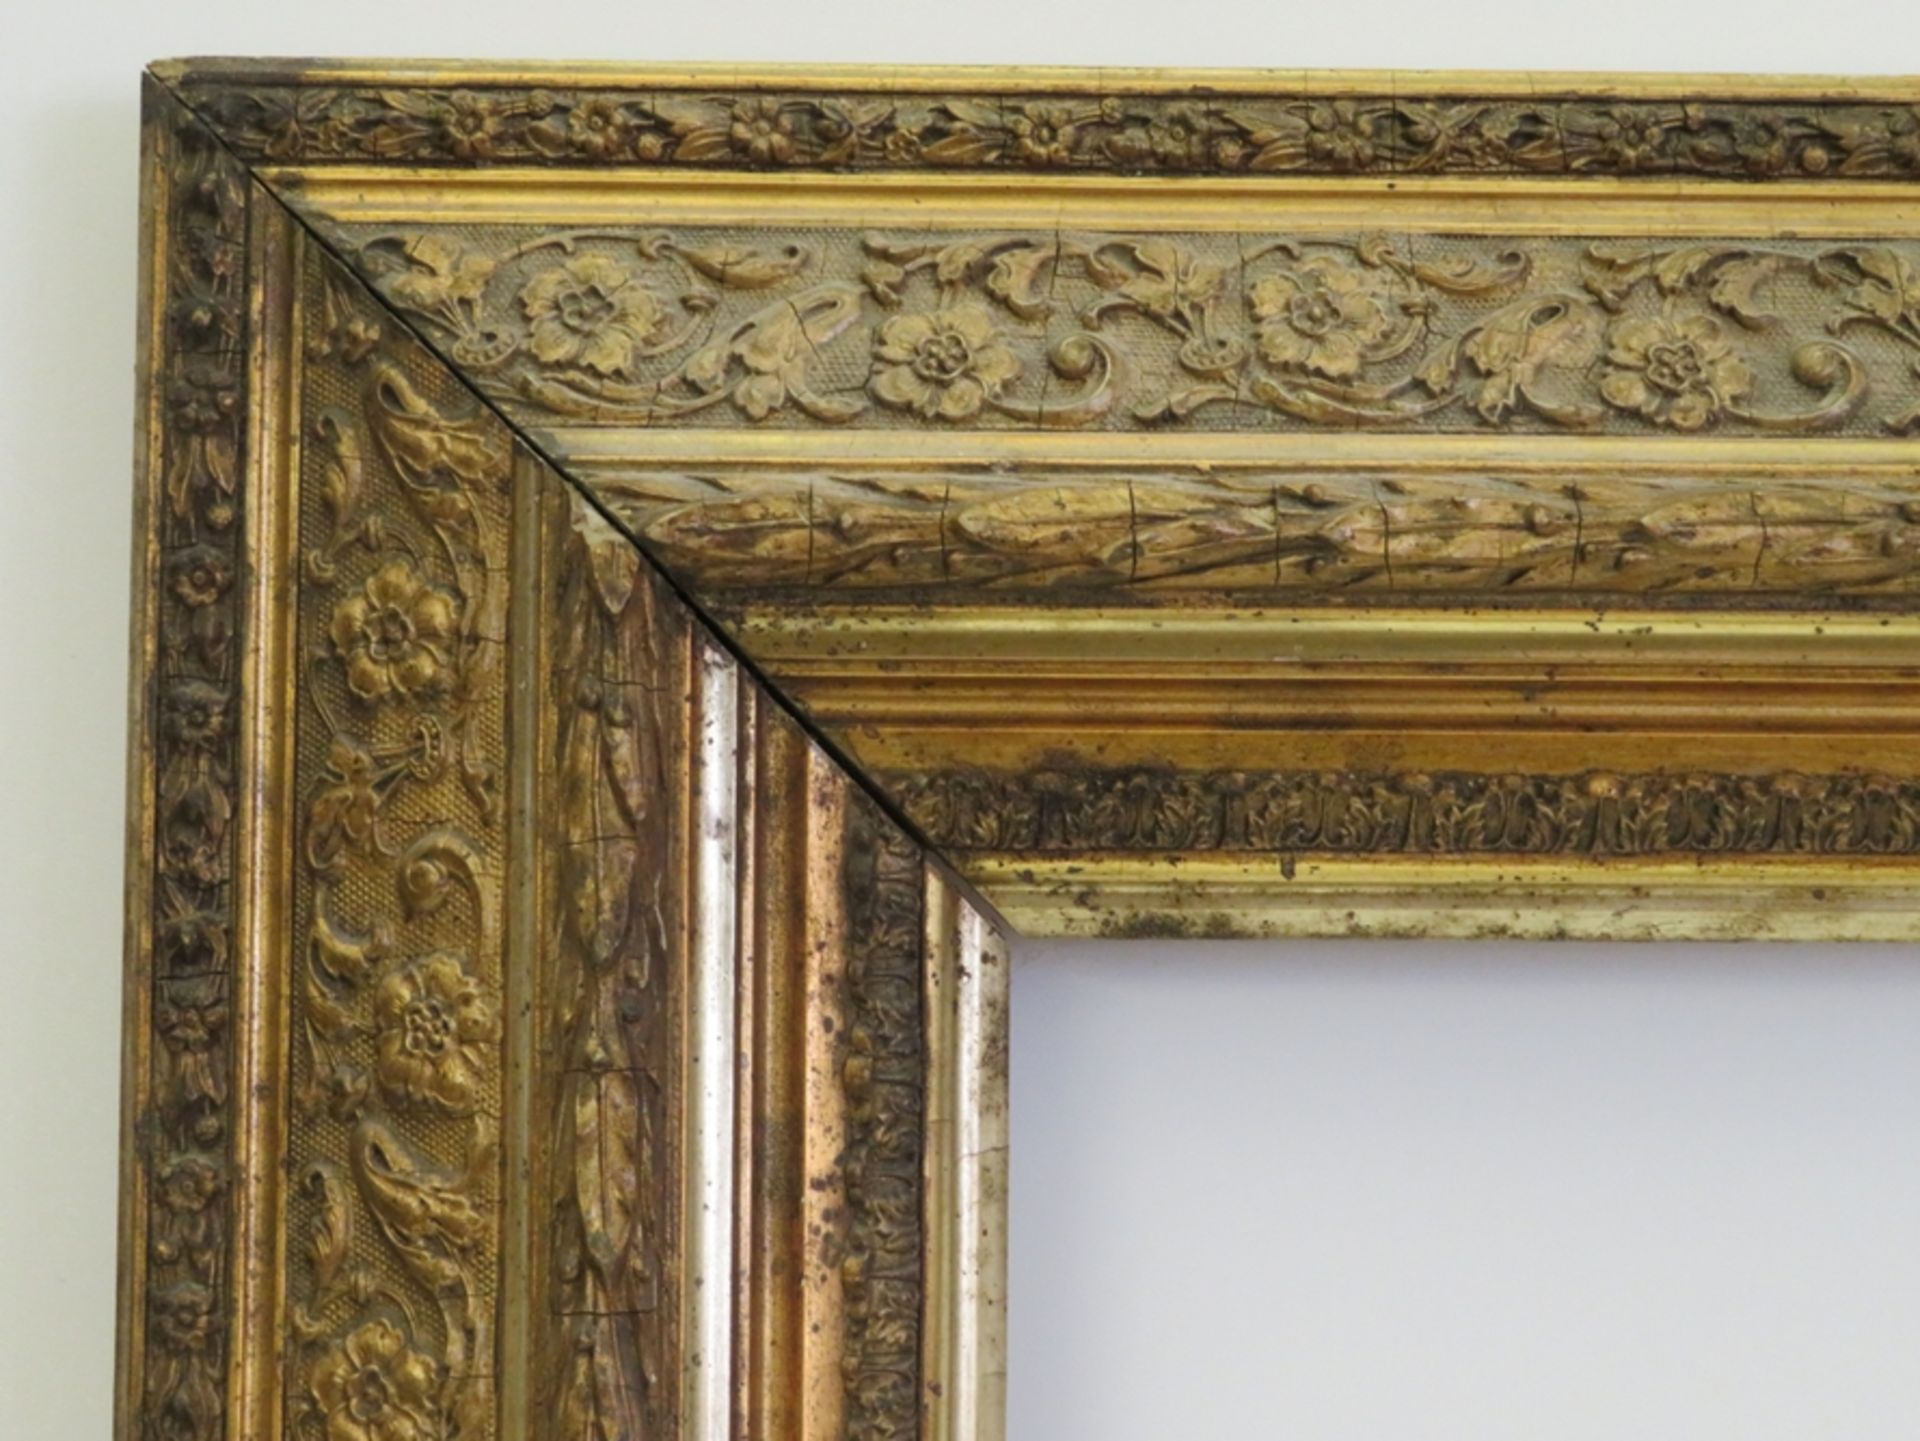 Vergoldeter Stuckrahmen, 19. Jahrhundert, min.best., Innenmaß 57,9 x 43,9 cm, Außenmaß 84 x 70 cm. - Image 2 of 2